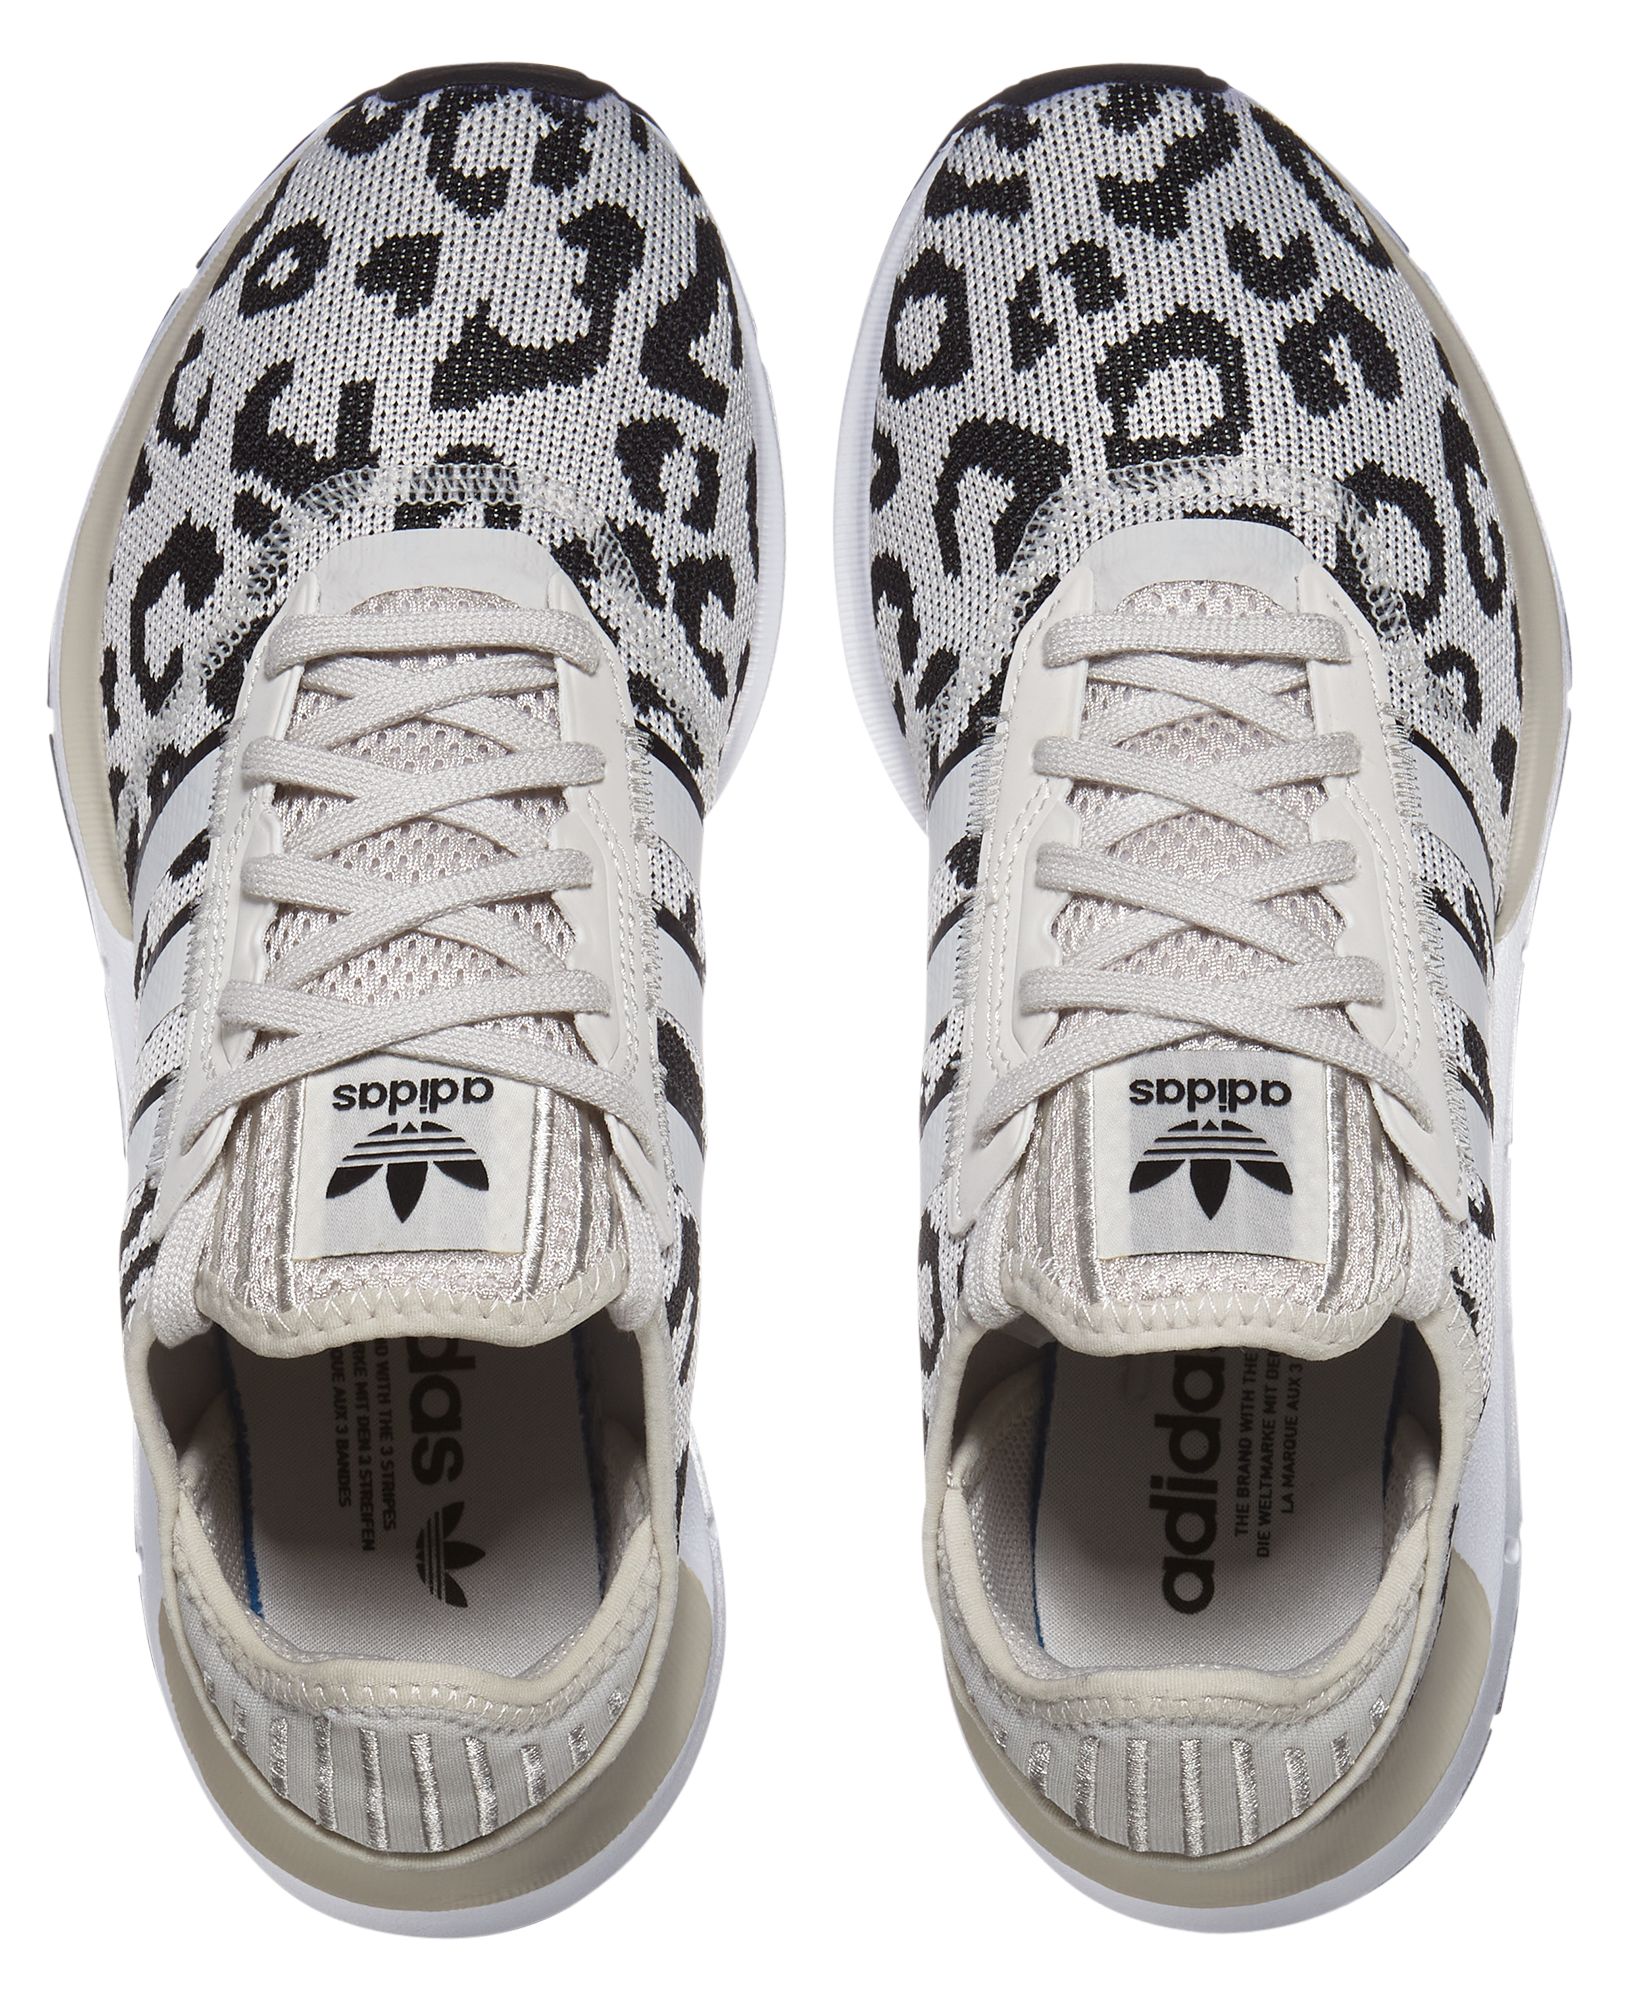 leopard tennis shoes adidas